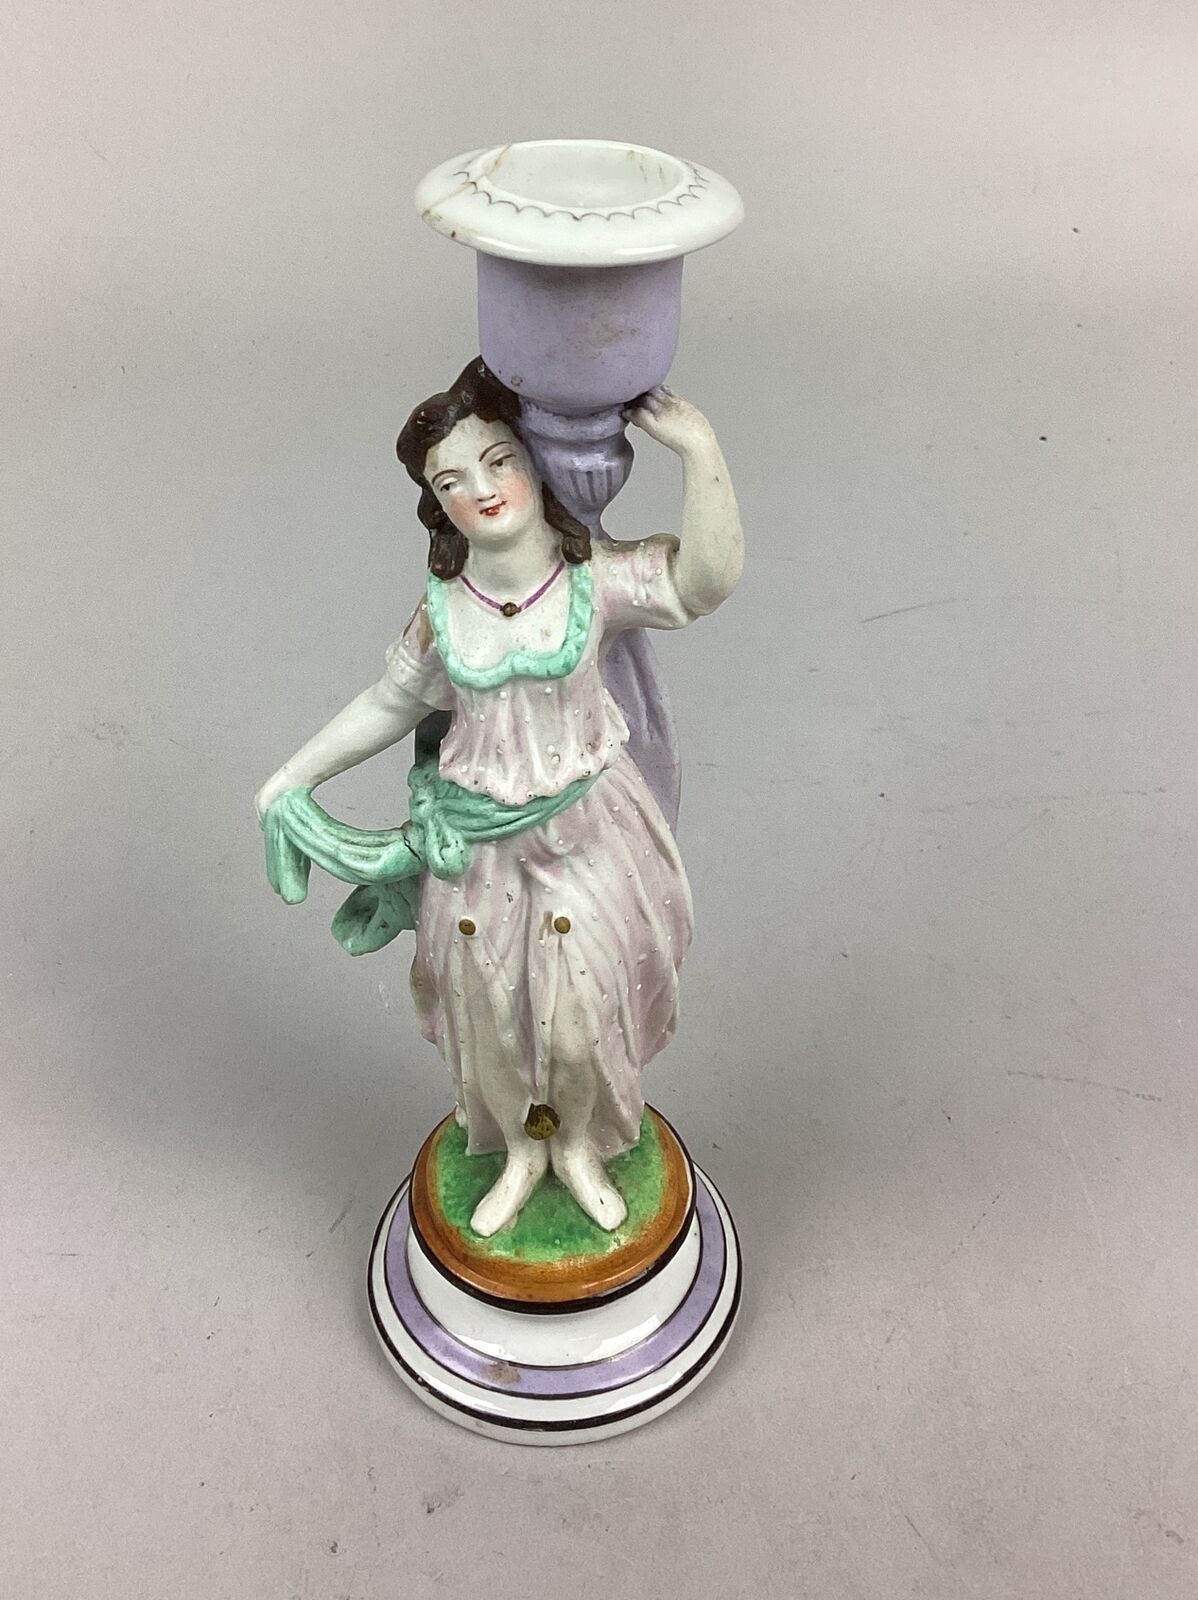 Rare Antique English Derby Hard Paste Porcelain Woman & Candlestick Holder - 8”